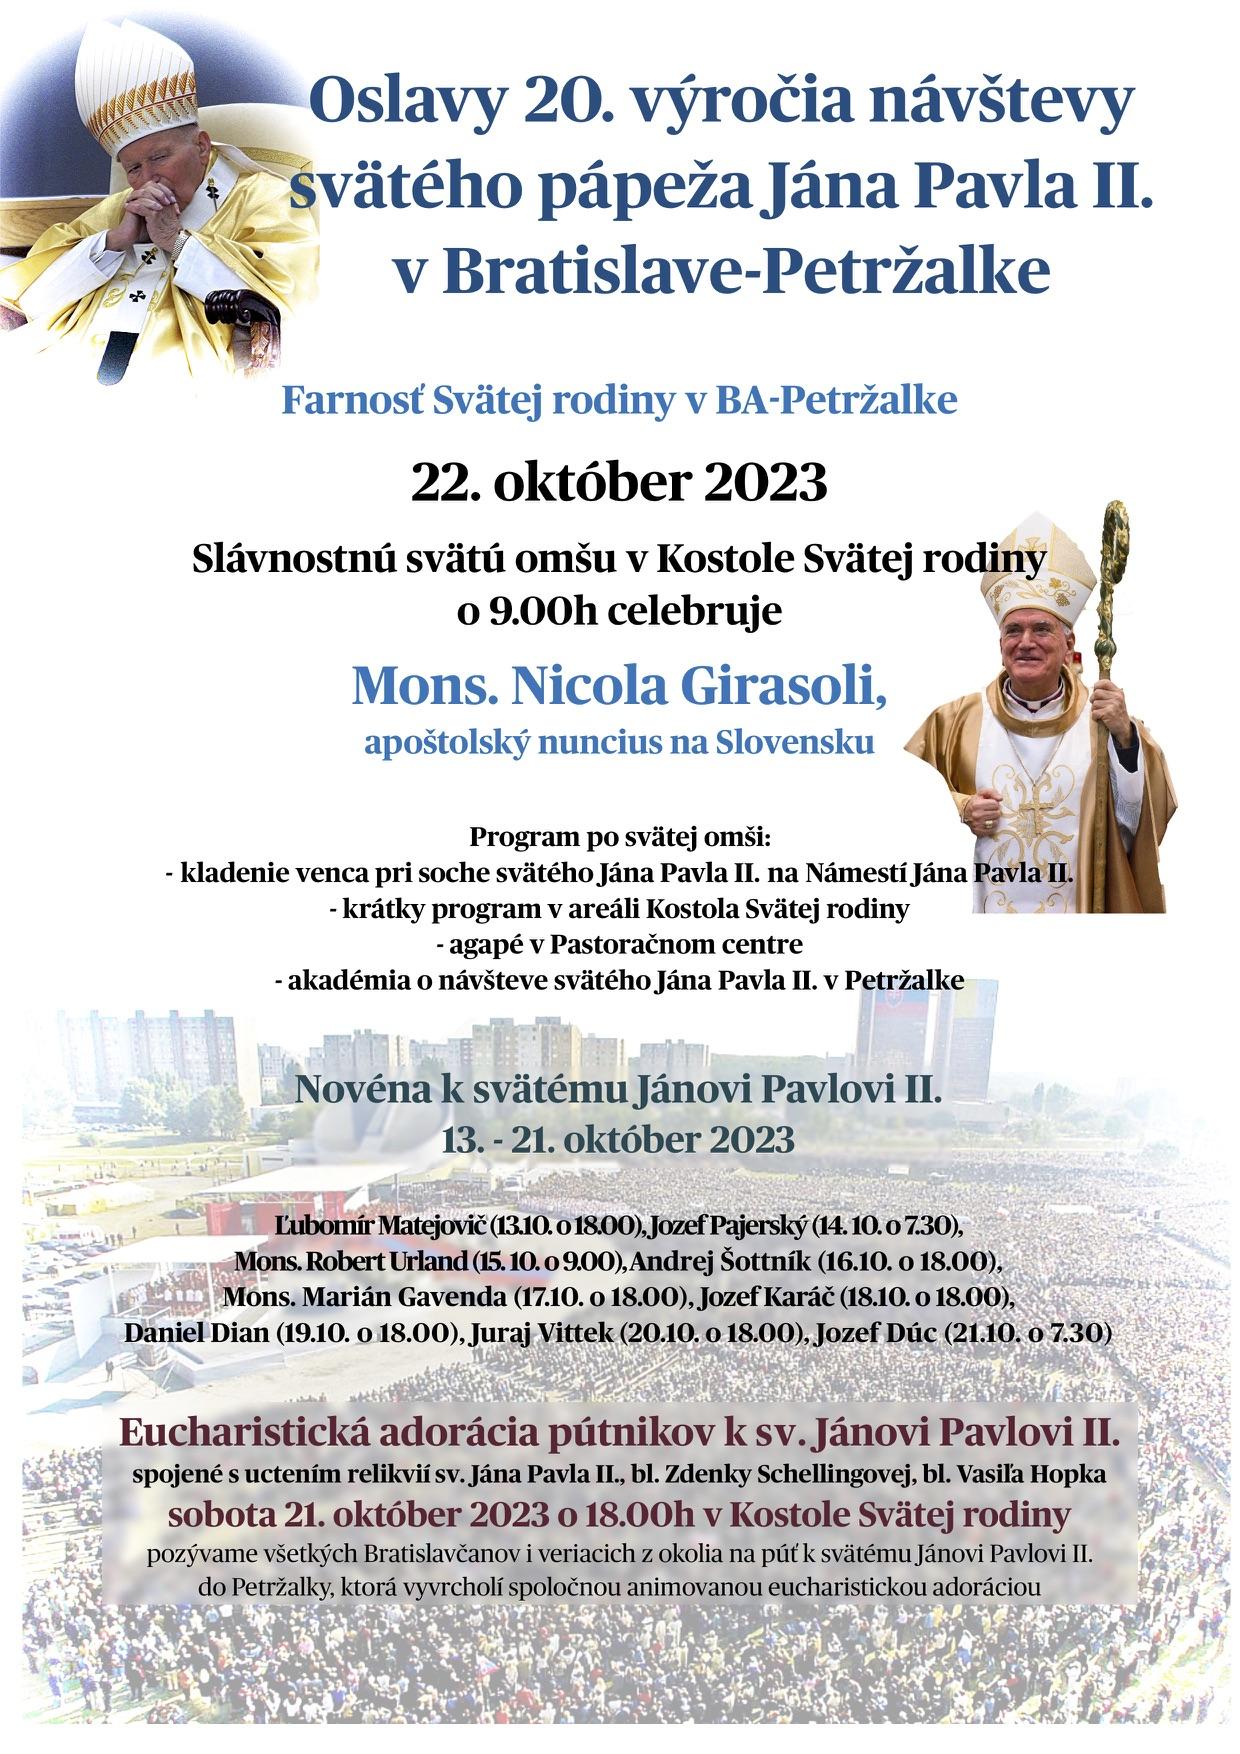 Bratislava, Petrzalka, vyrocie, navsteva, Jan Pavol II., plagat